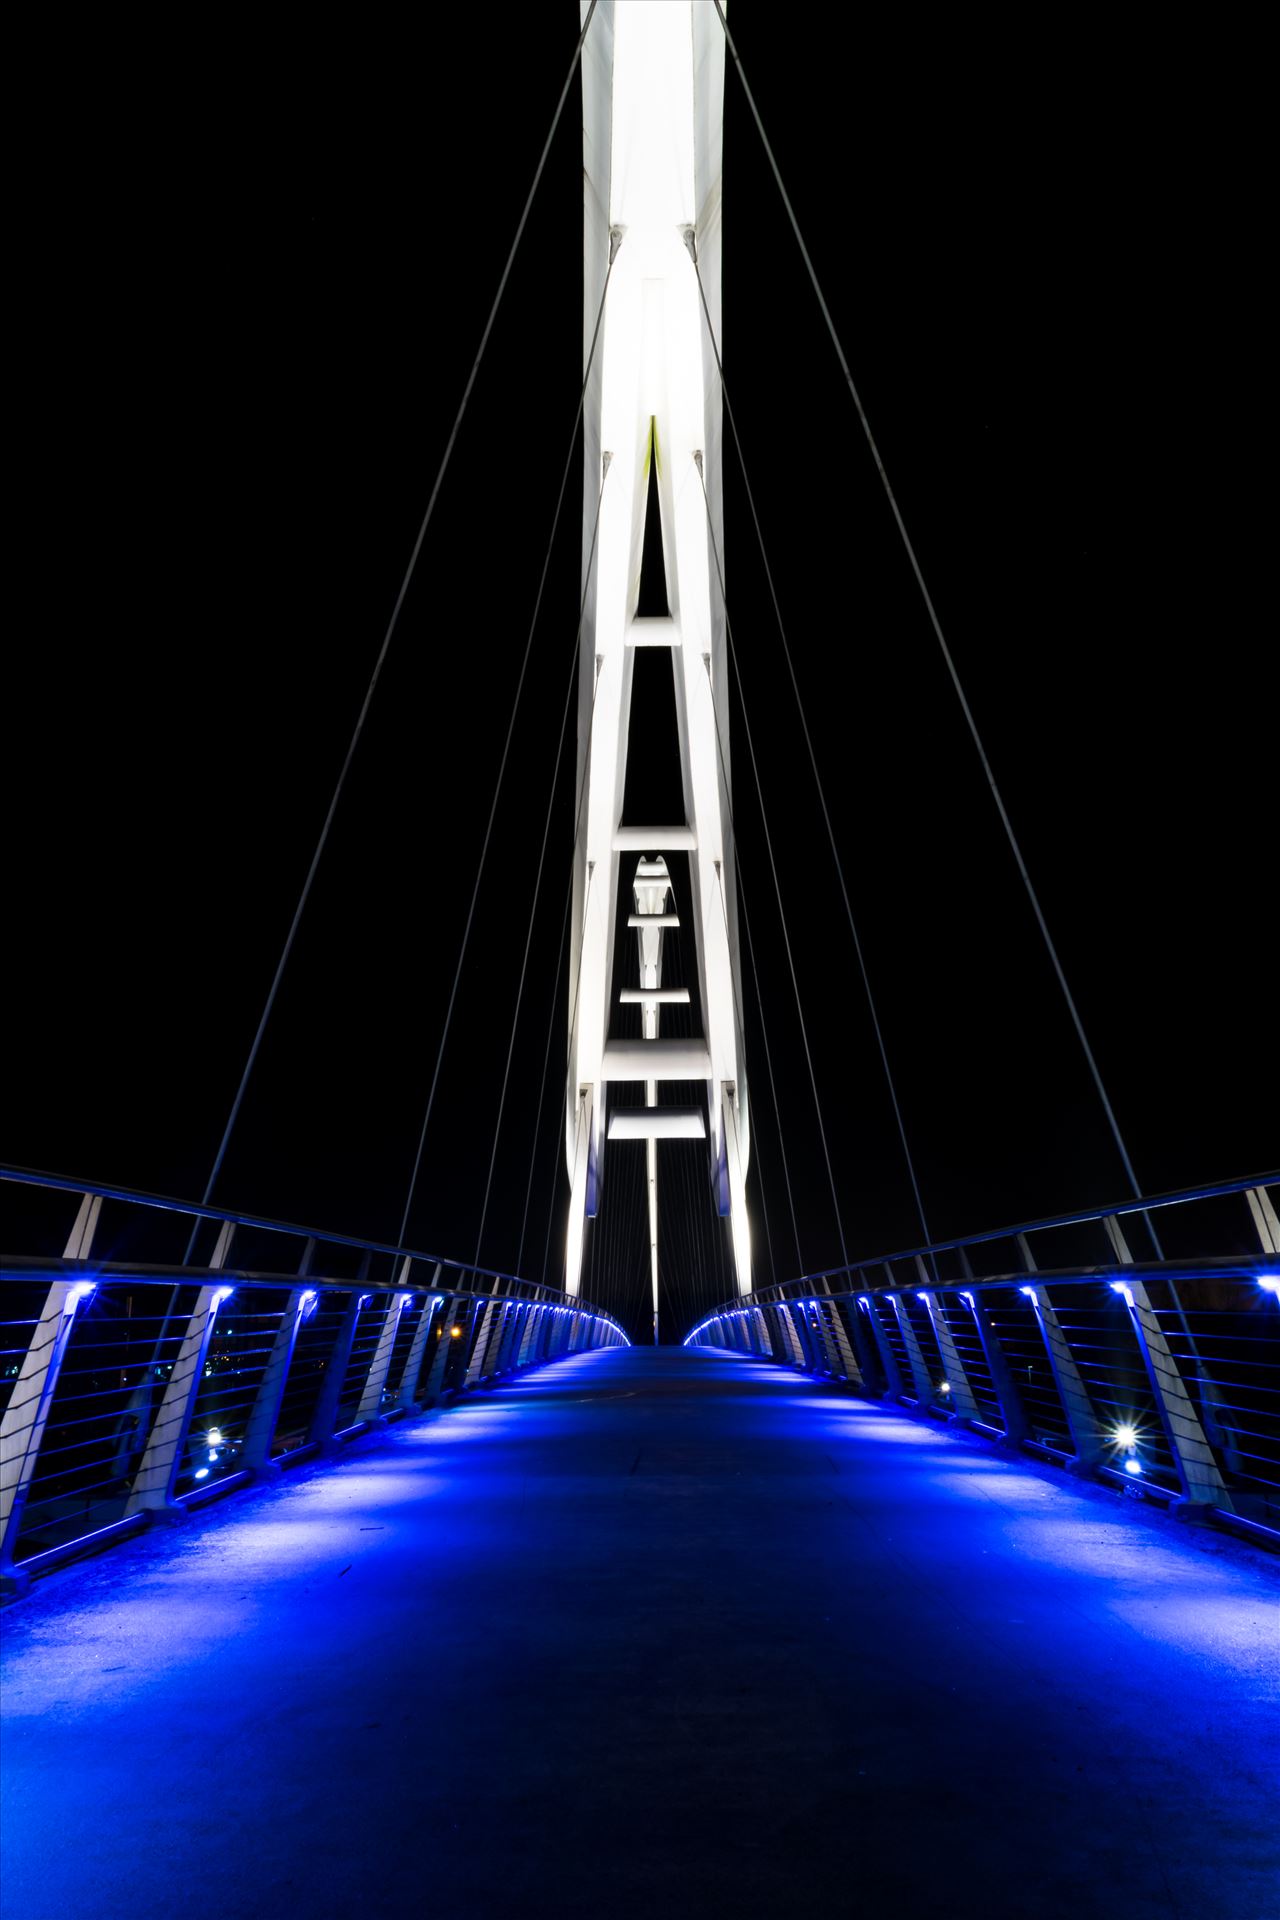 Infinity Bridge at night Stockton on Tees - Infinity Bridge Stockton on Tees at night by AJ Stoves Photography